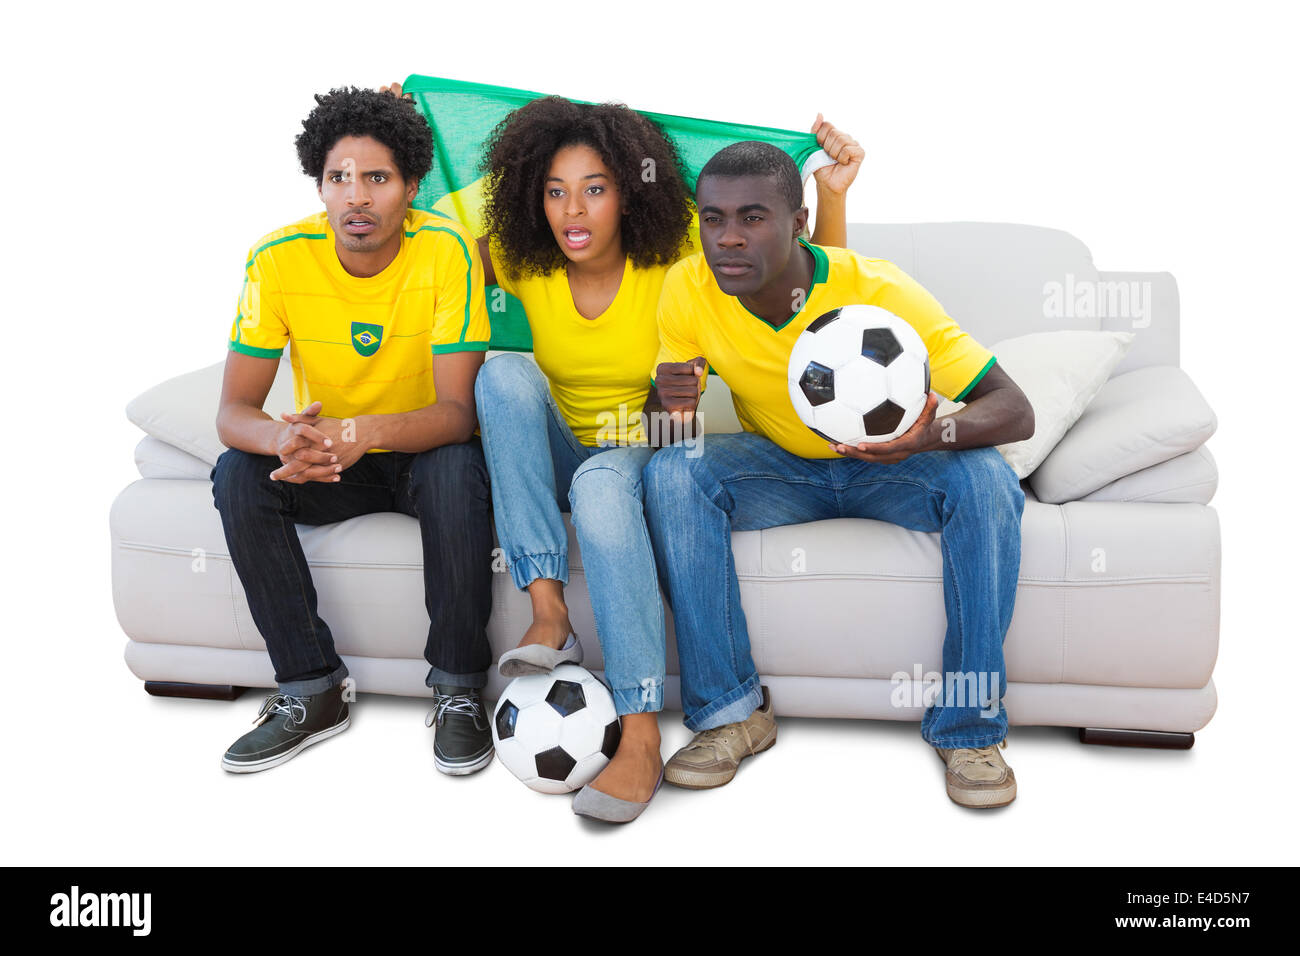 Brazilian football fans in yellow sitting on the sofa Stock Photo - Alamy